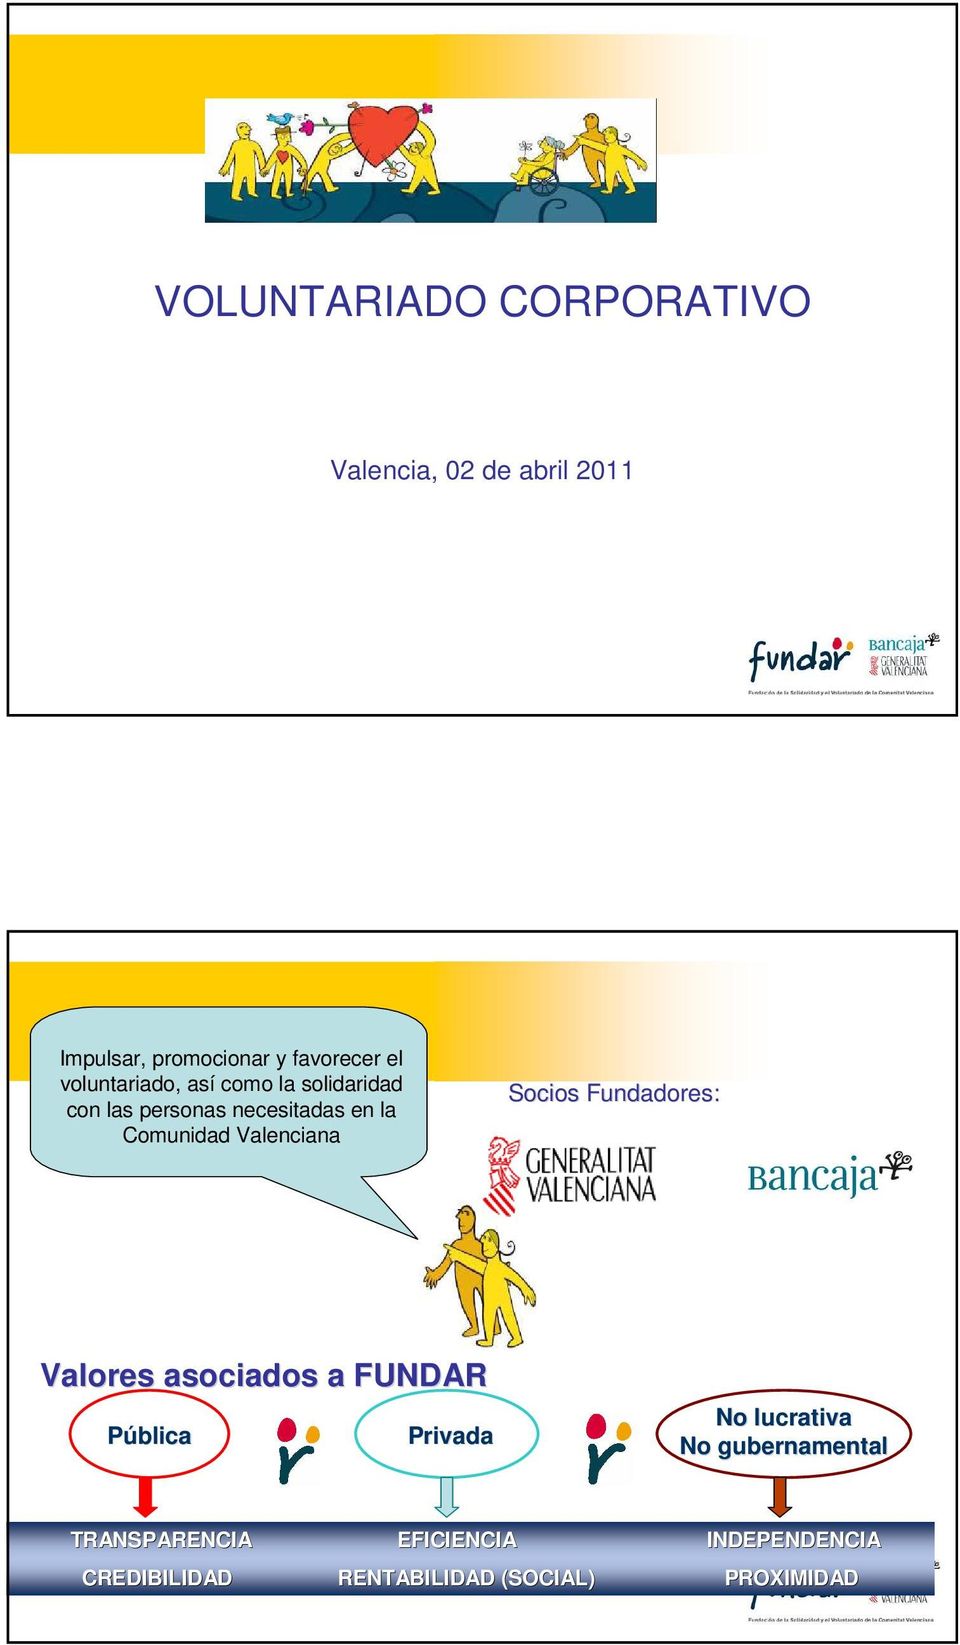 Valenciana Socios Fundadores: Valores asociados a FUNDAR Pública Privada No lucrativa No